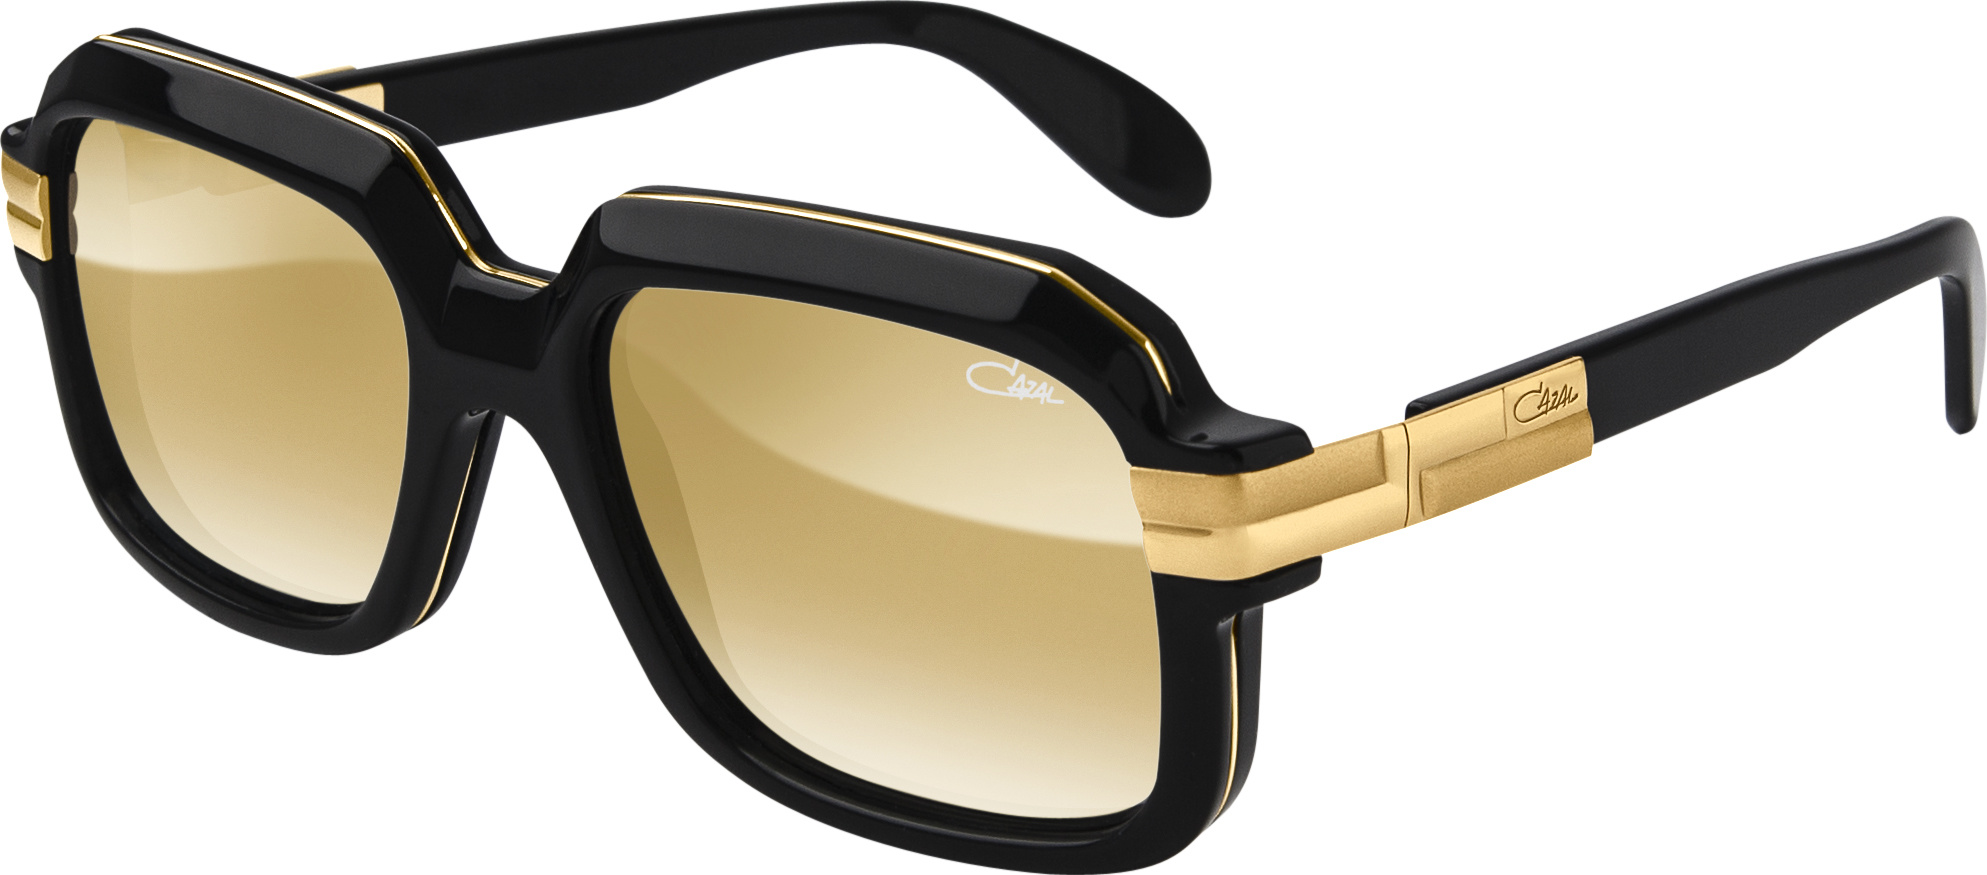 Cazal Legend Sun Glasses 667/3 Black